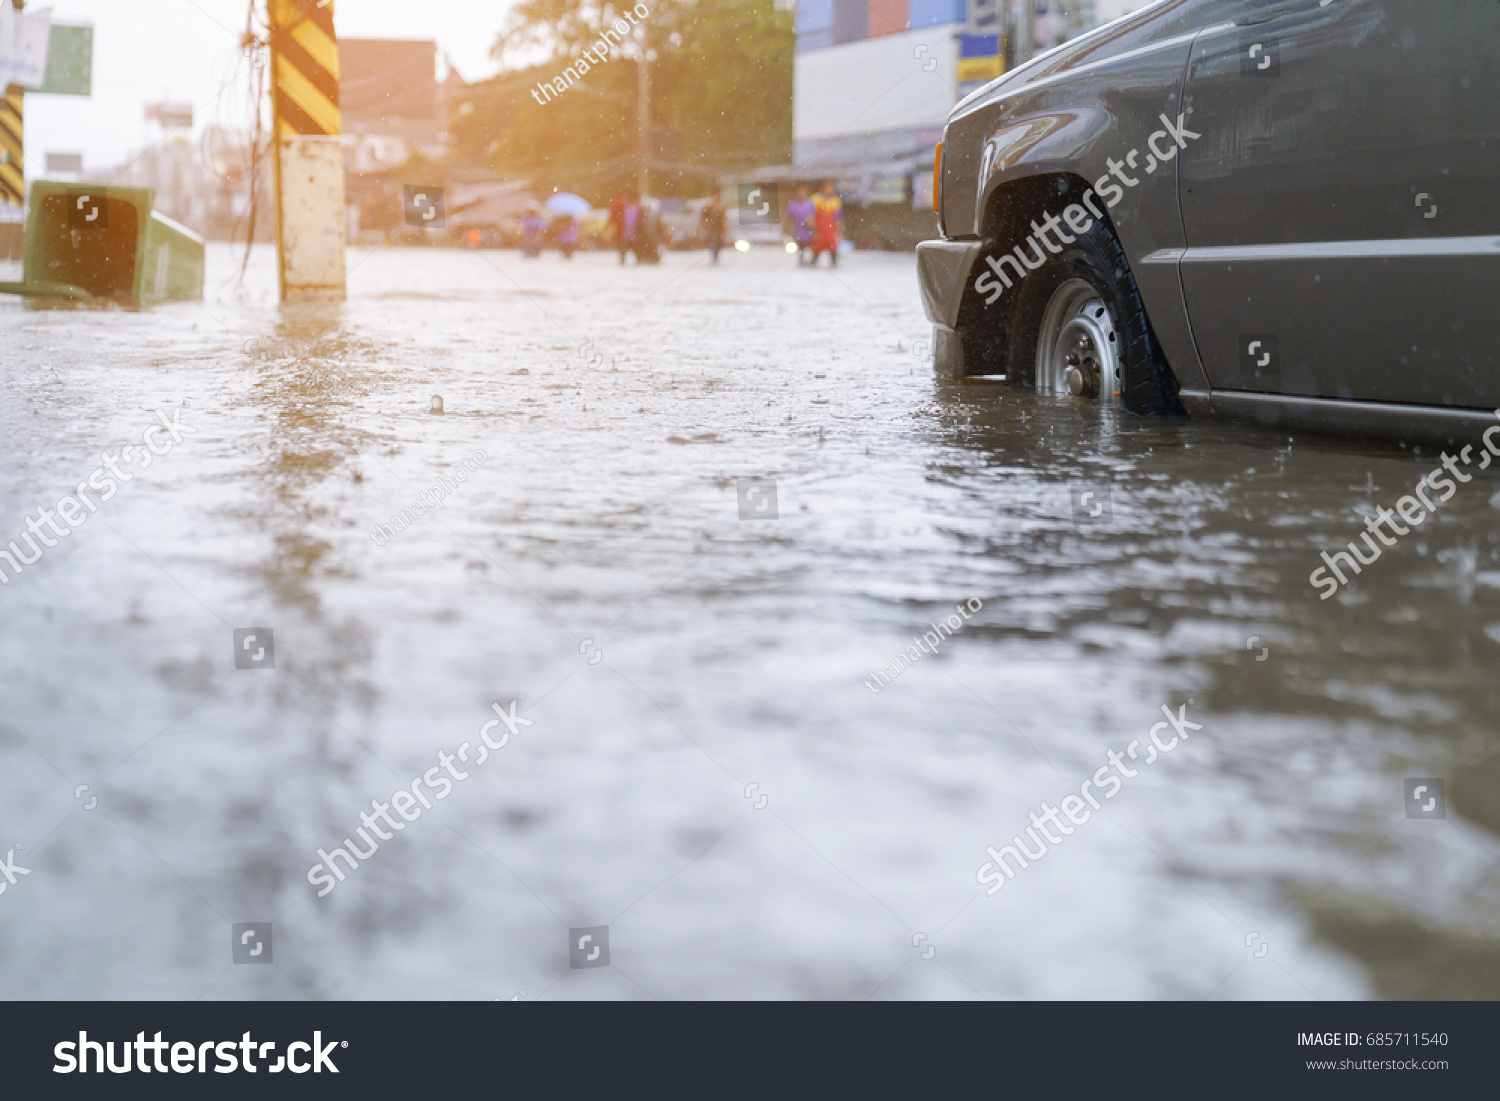 flood water - people walking in the rain on flooded road #685711540